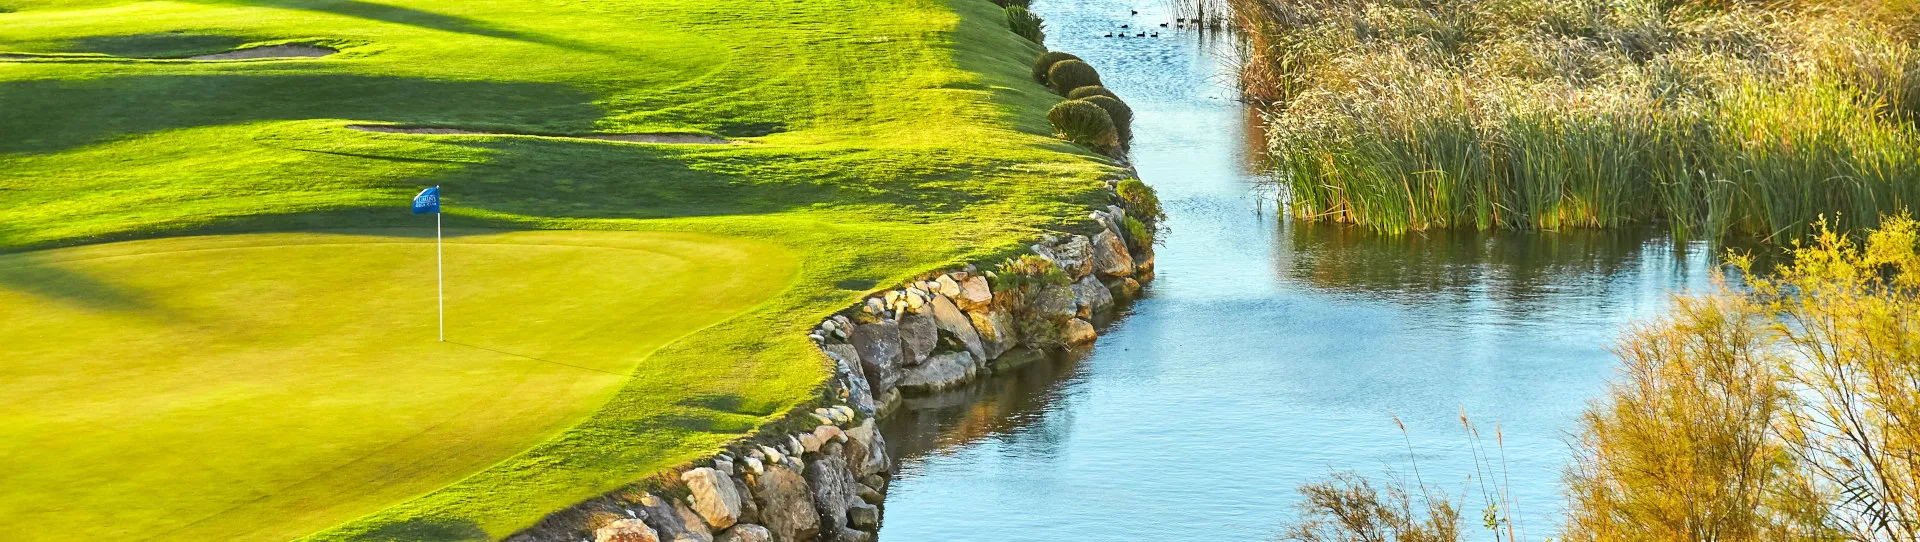 Spain golf courses - Infinitum Lakes (Ex Lumine) - Photo 1